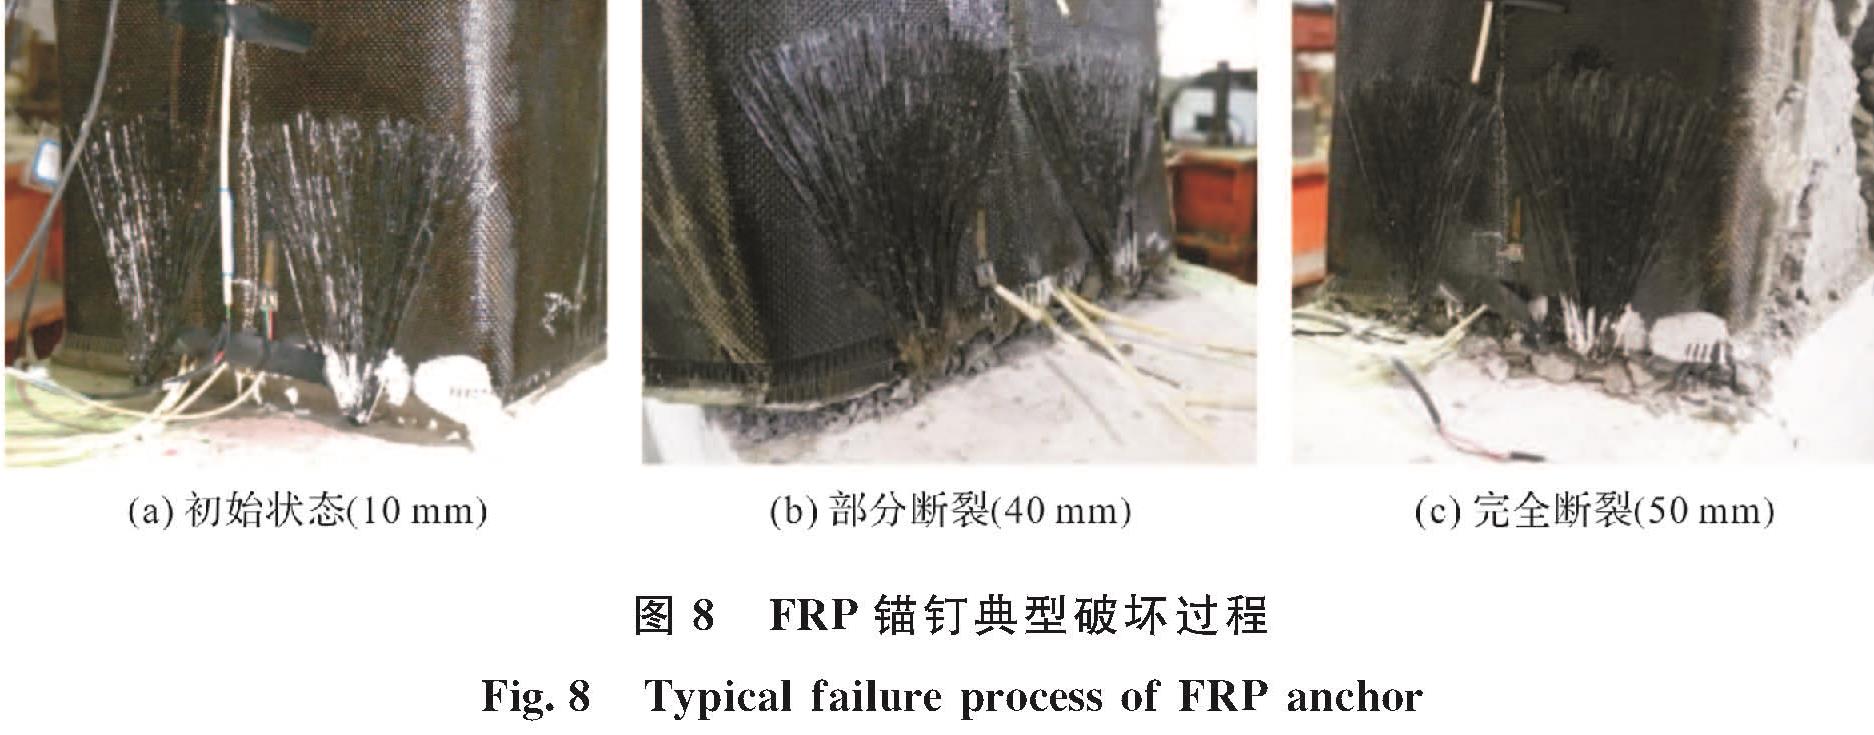 图8 FRP锚钉典型破坏过程<br/>Fig.8 Typical failure process of FRP anchor